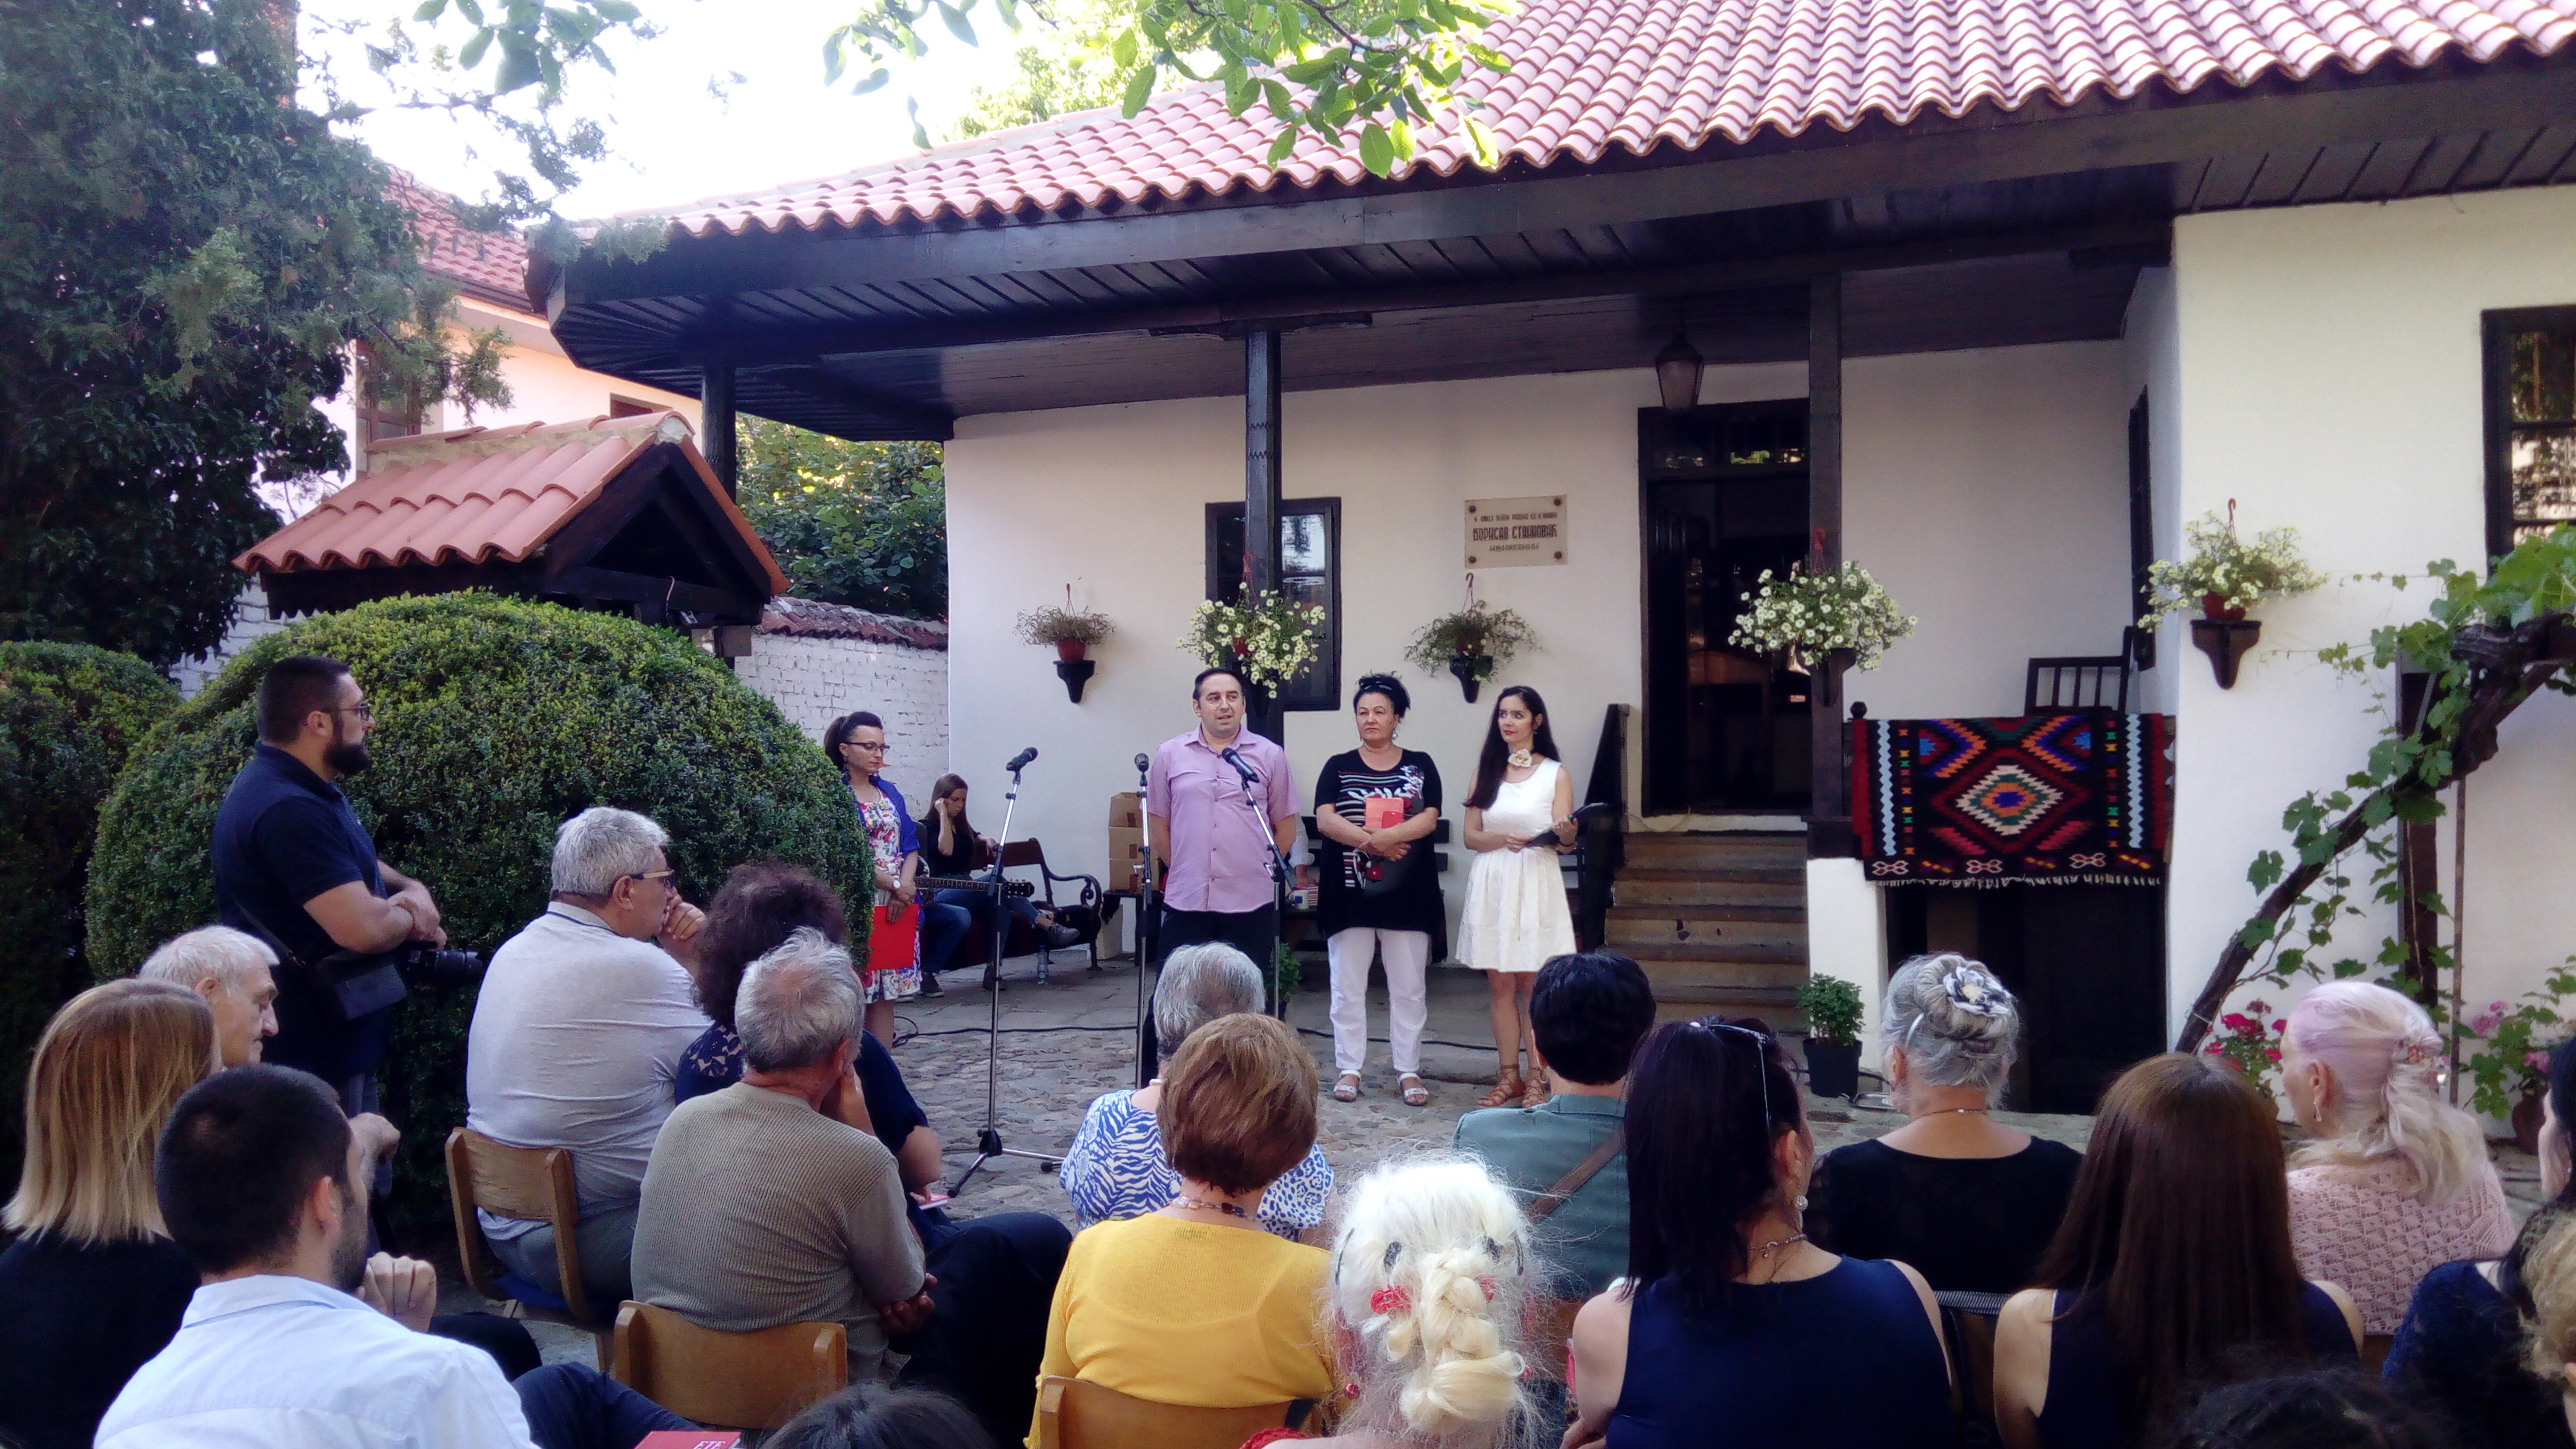 U Vranju počela književna manifestacija „Vranjskom Kaldrmom“. 